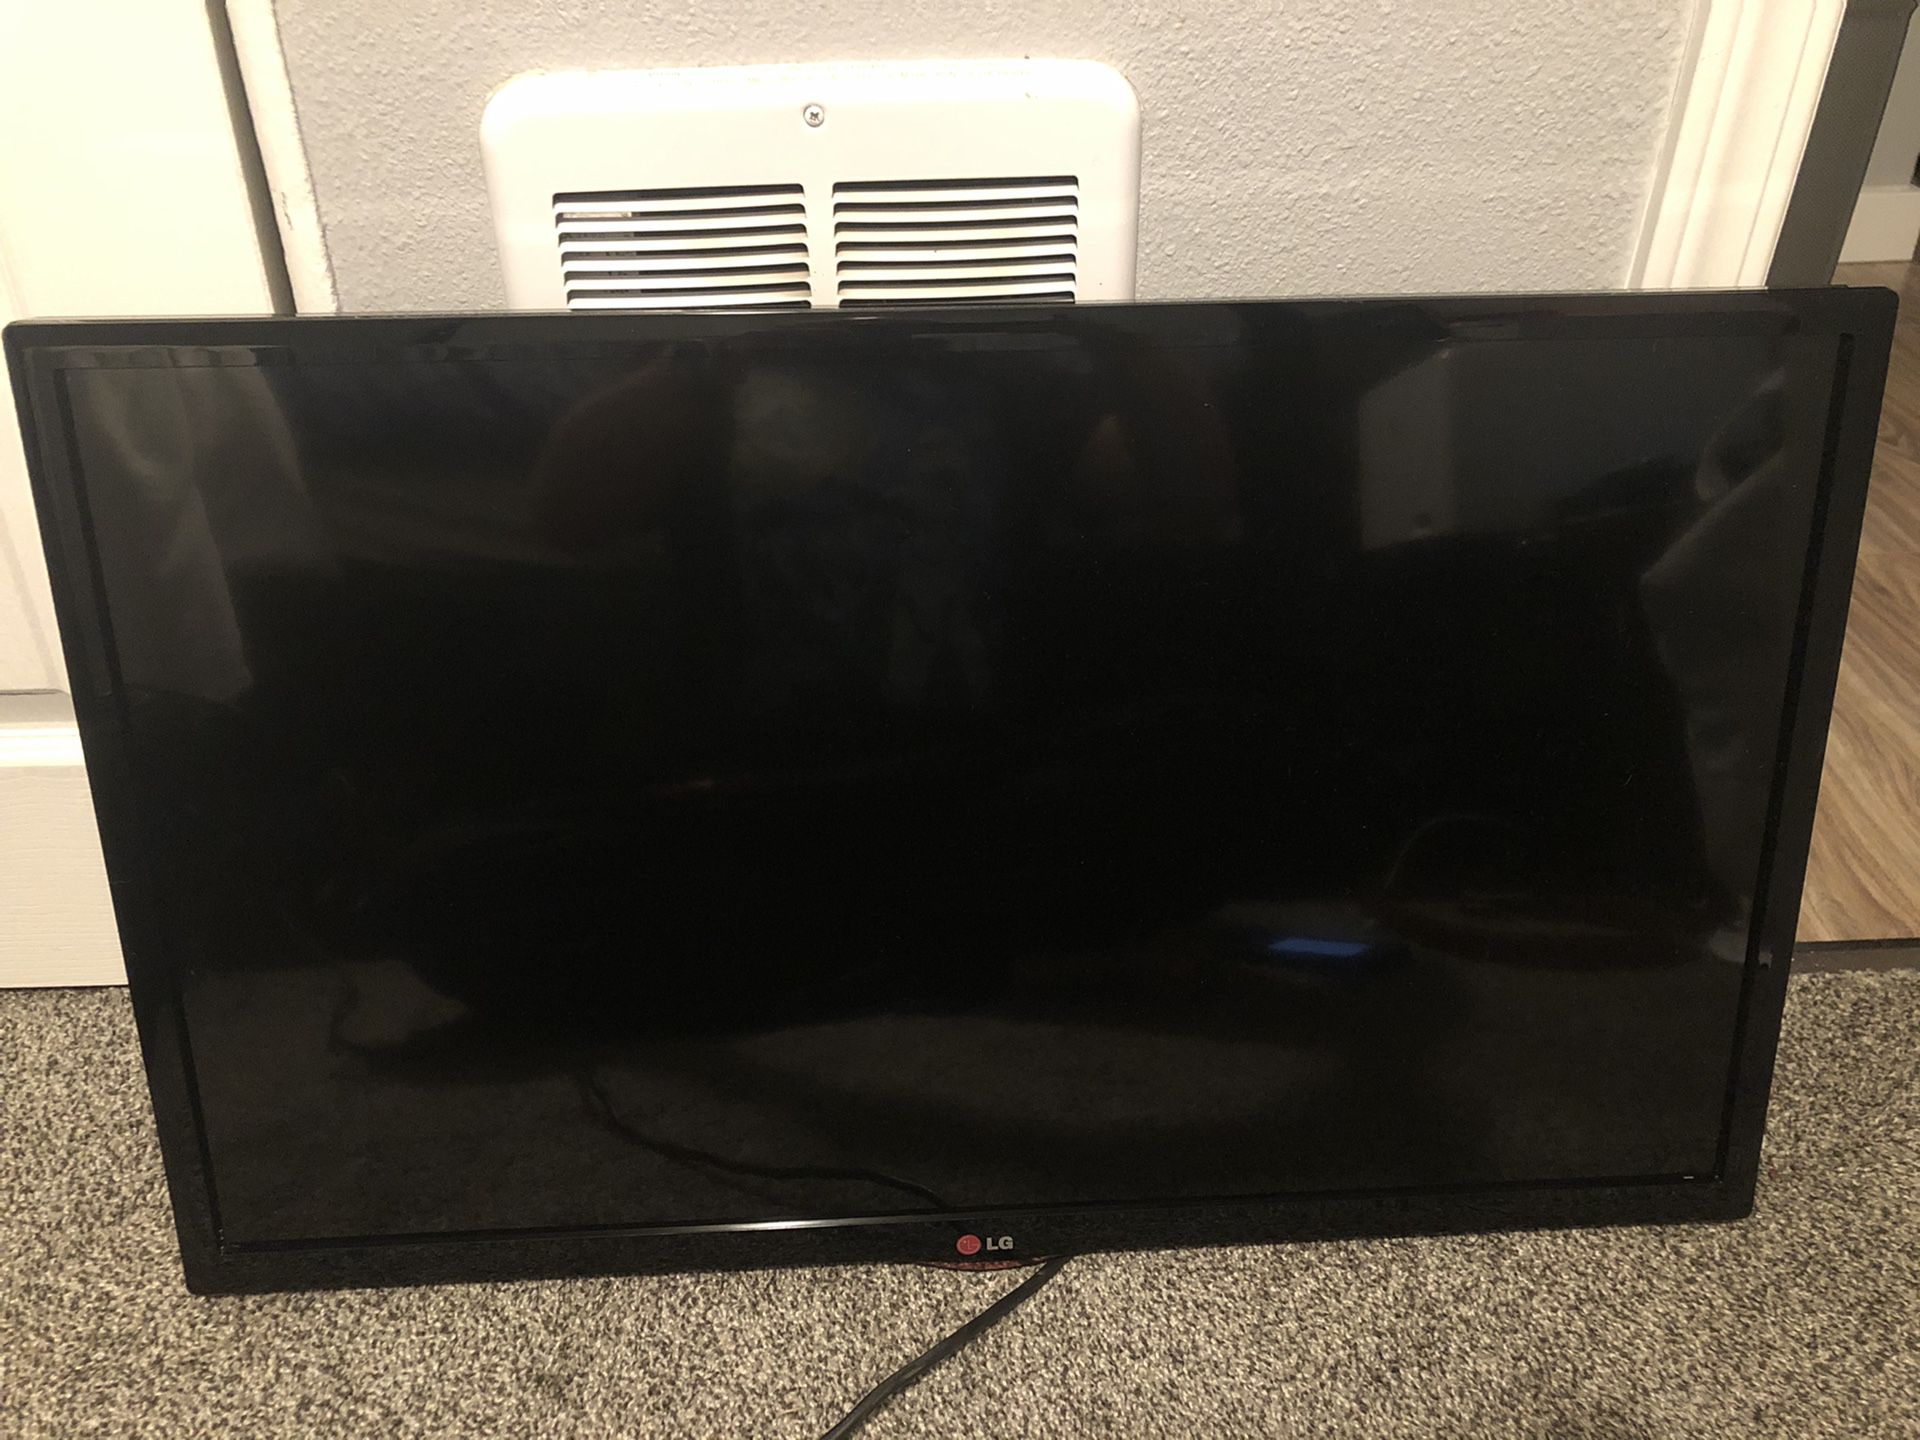 32 inch LG LED TV